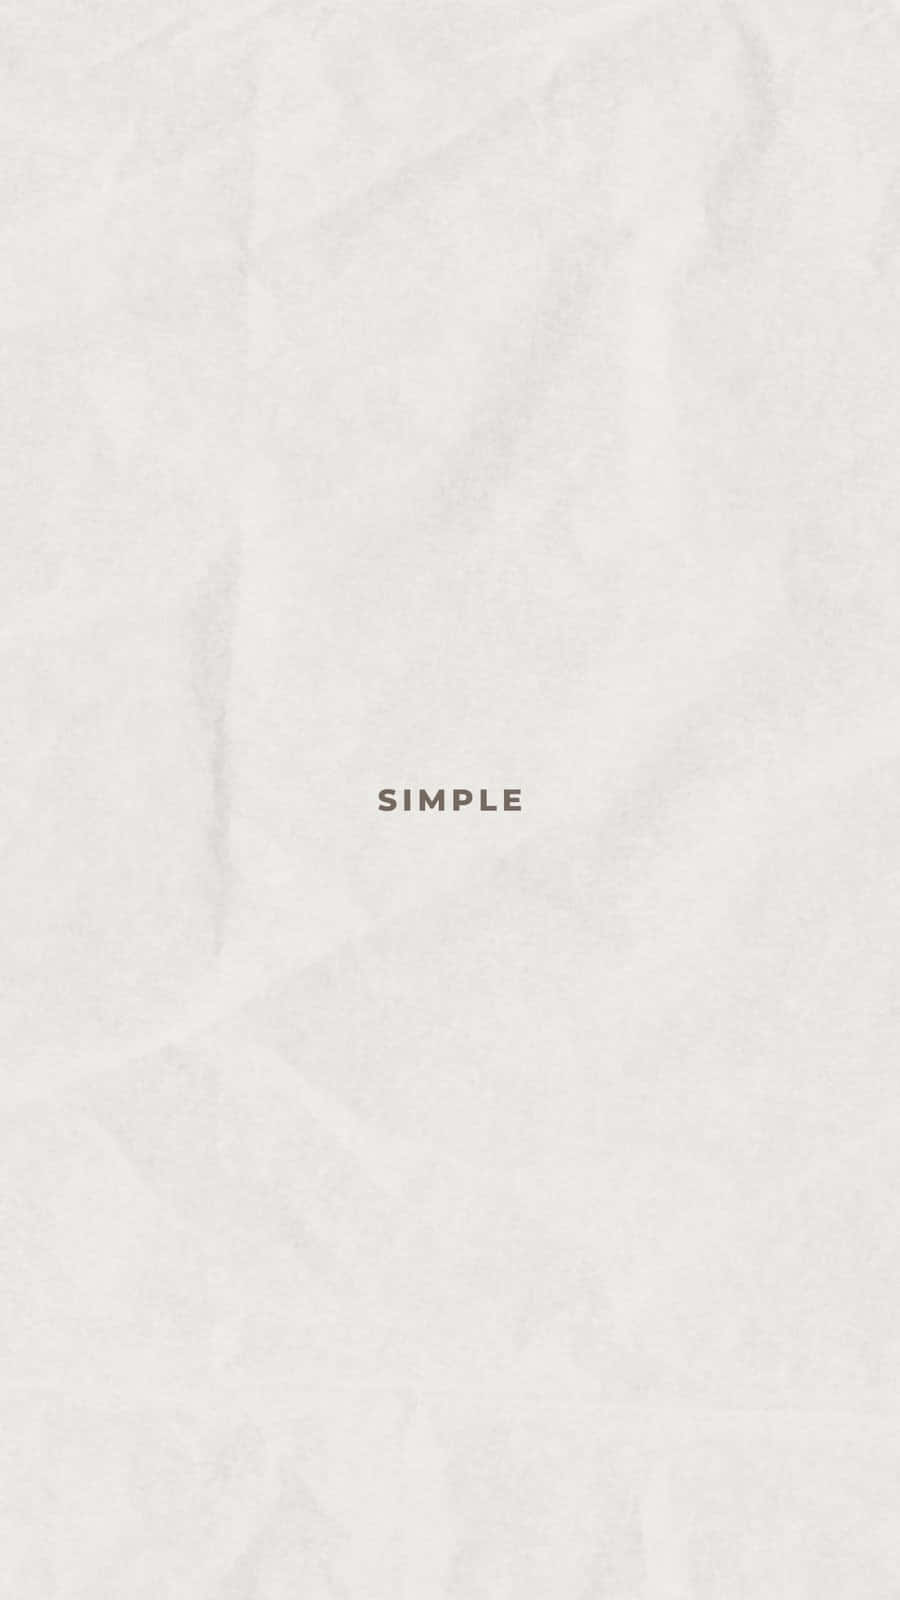 Simple - A Simple - A Simple - A Simple - A Simple - A Simple - A Simple Wallpaper